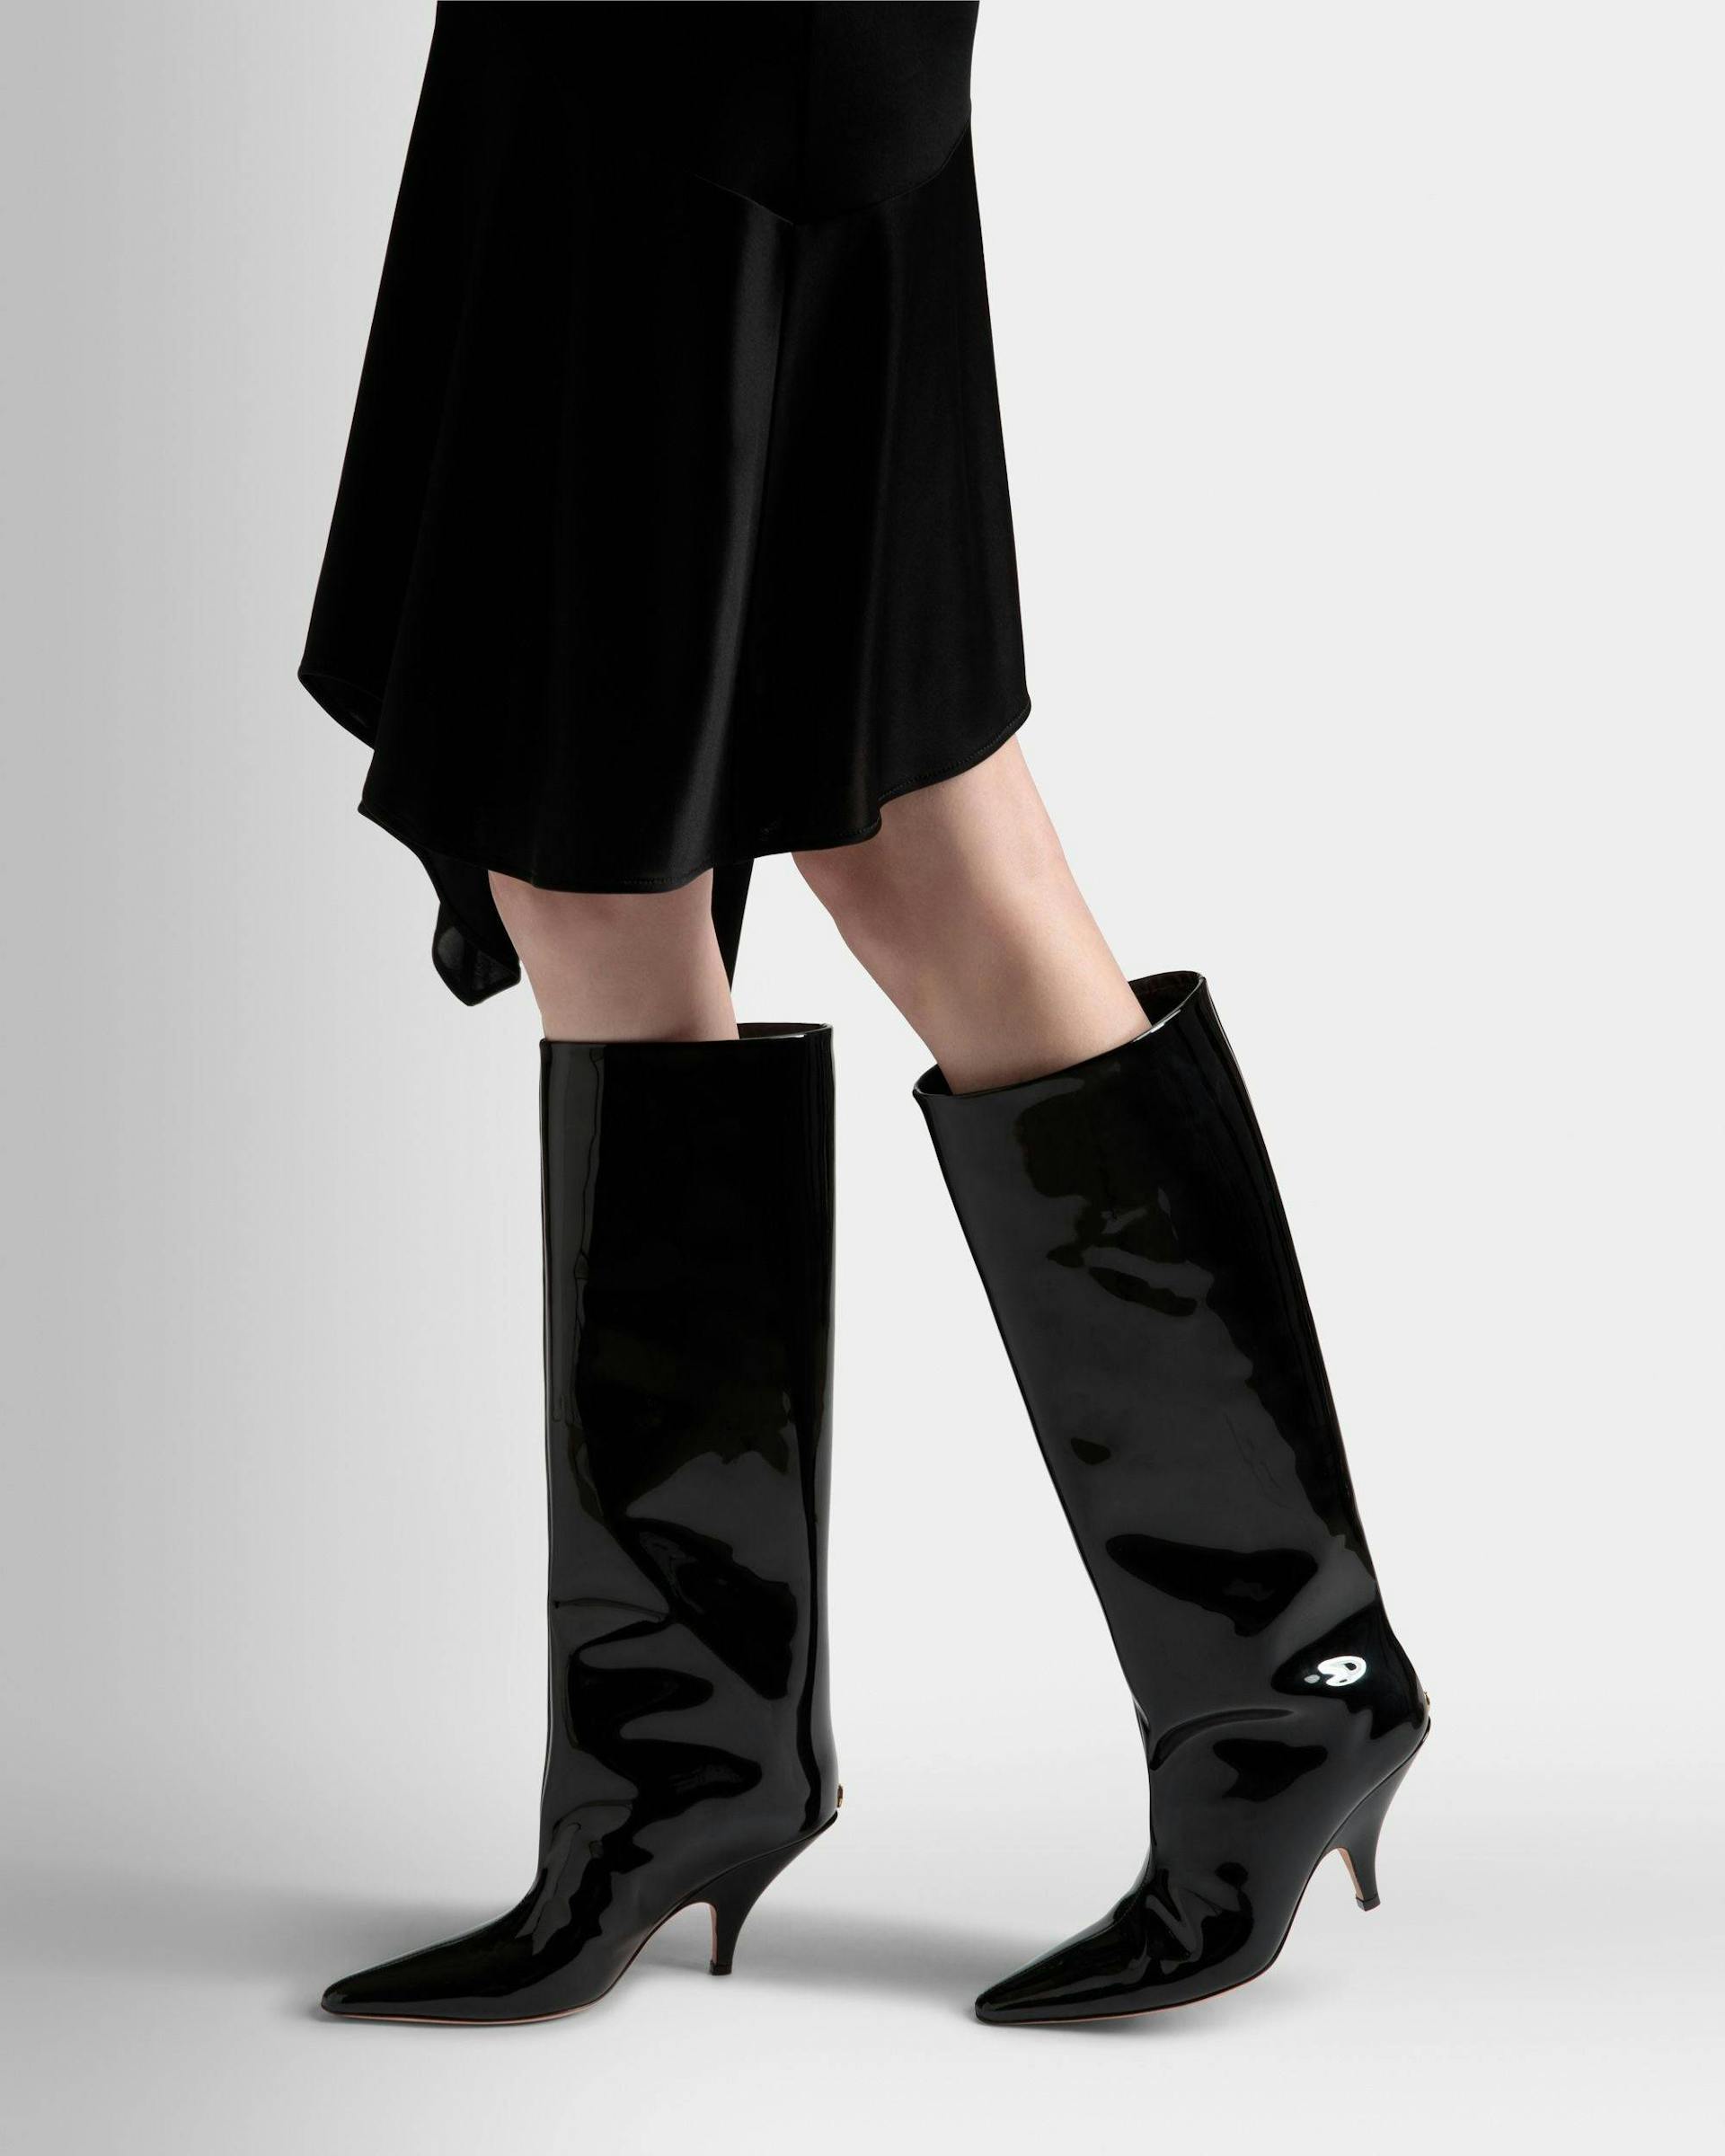 Katy Long Boots In Black Leather - Women's - Bally - 02